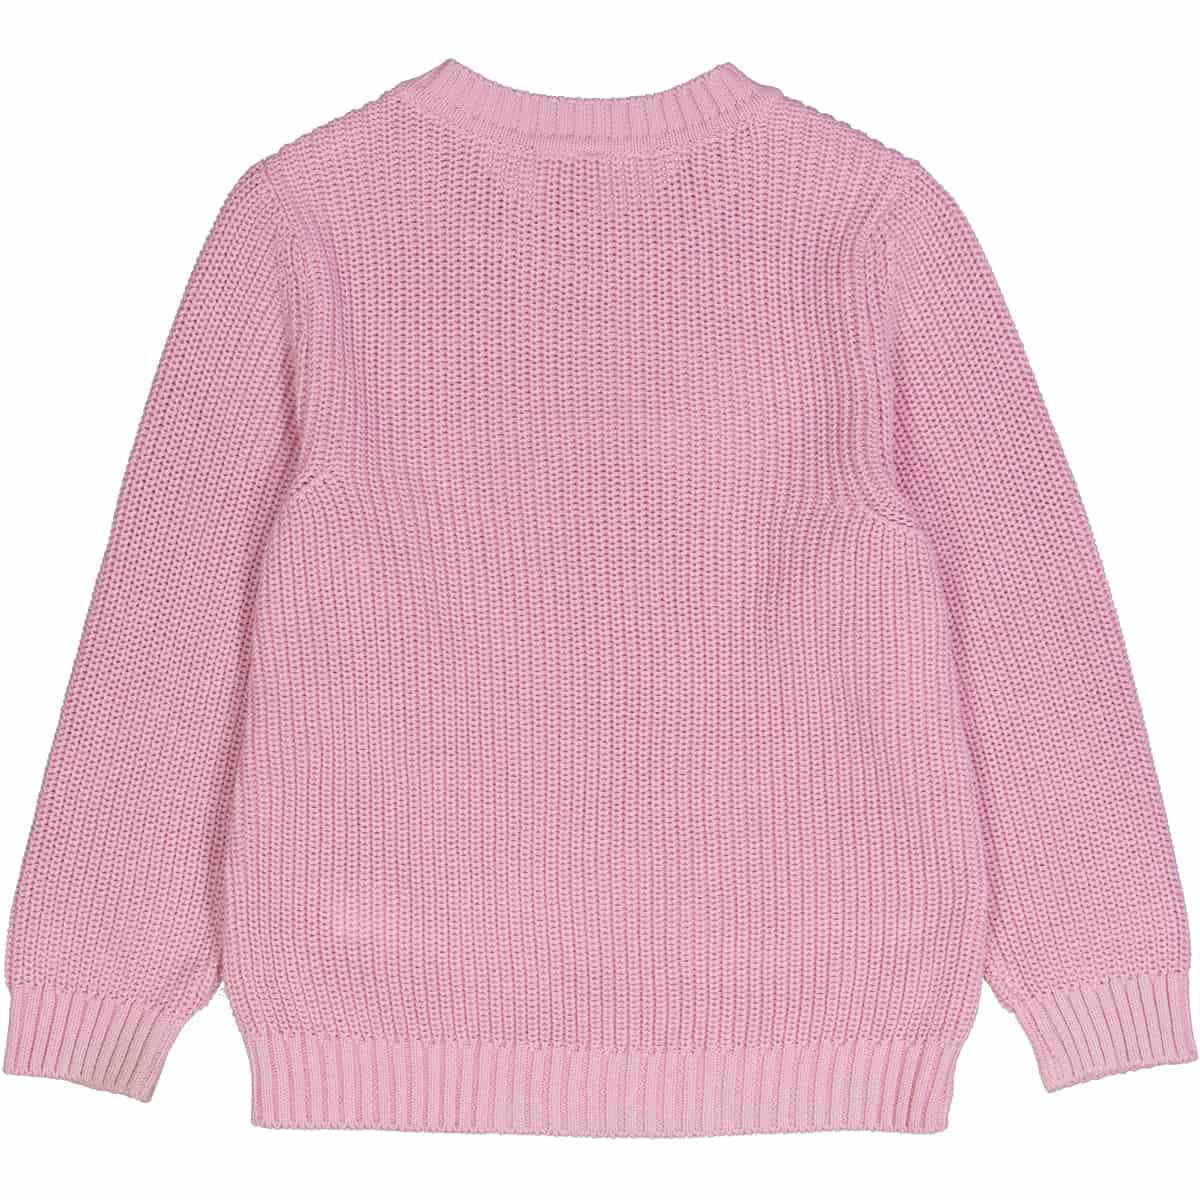 Strick-Pullover pastel